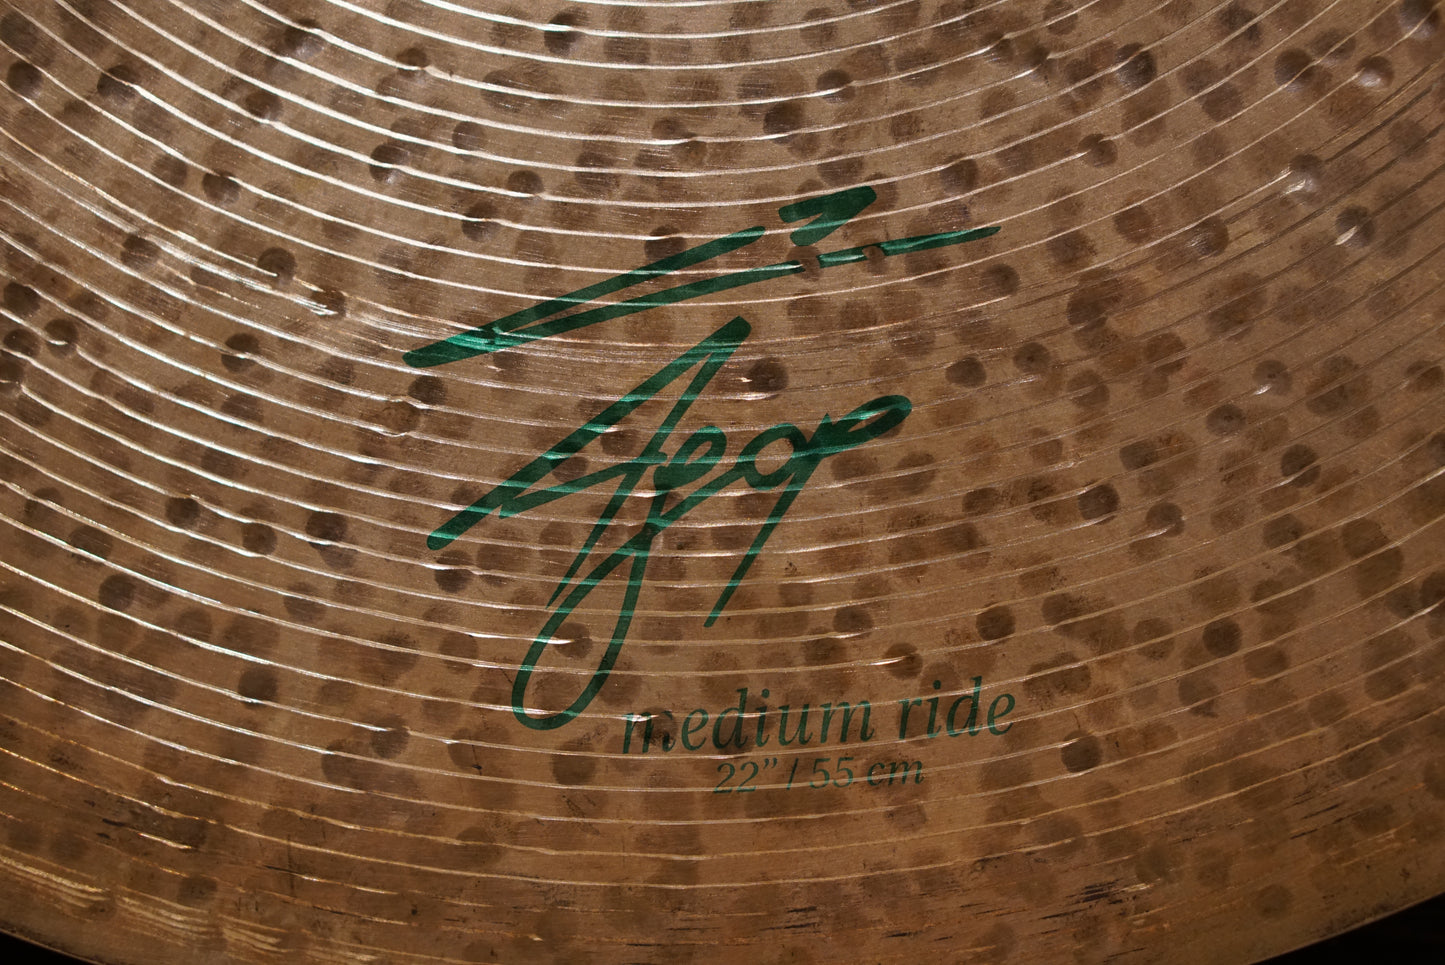 Istanbul Agop 22" Agop Signature Medium Ride Cymbal - 2610g